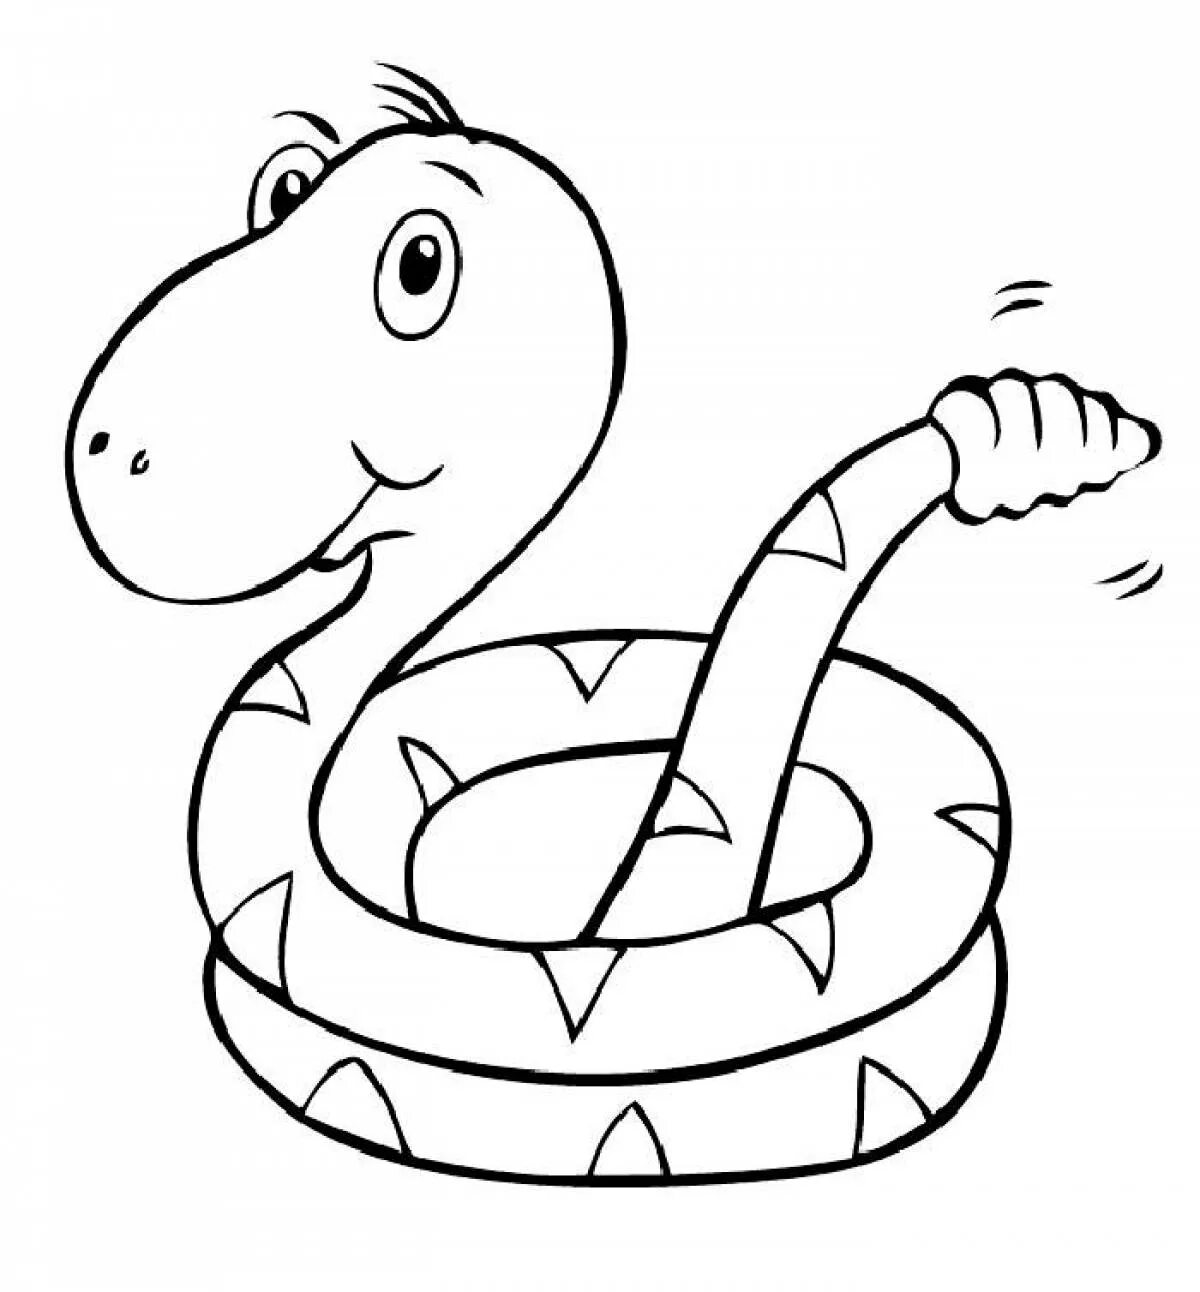 Змея раскраска. Змея раскраска для детей. Раскраска змеи для детей. Змей раскраска для детей. Раскраска змей для детей